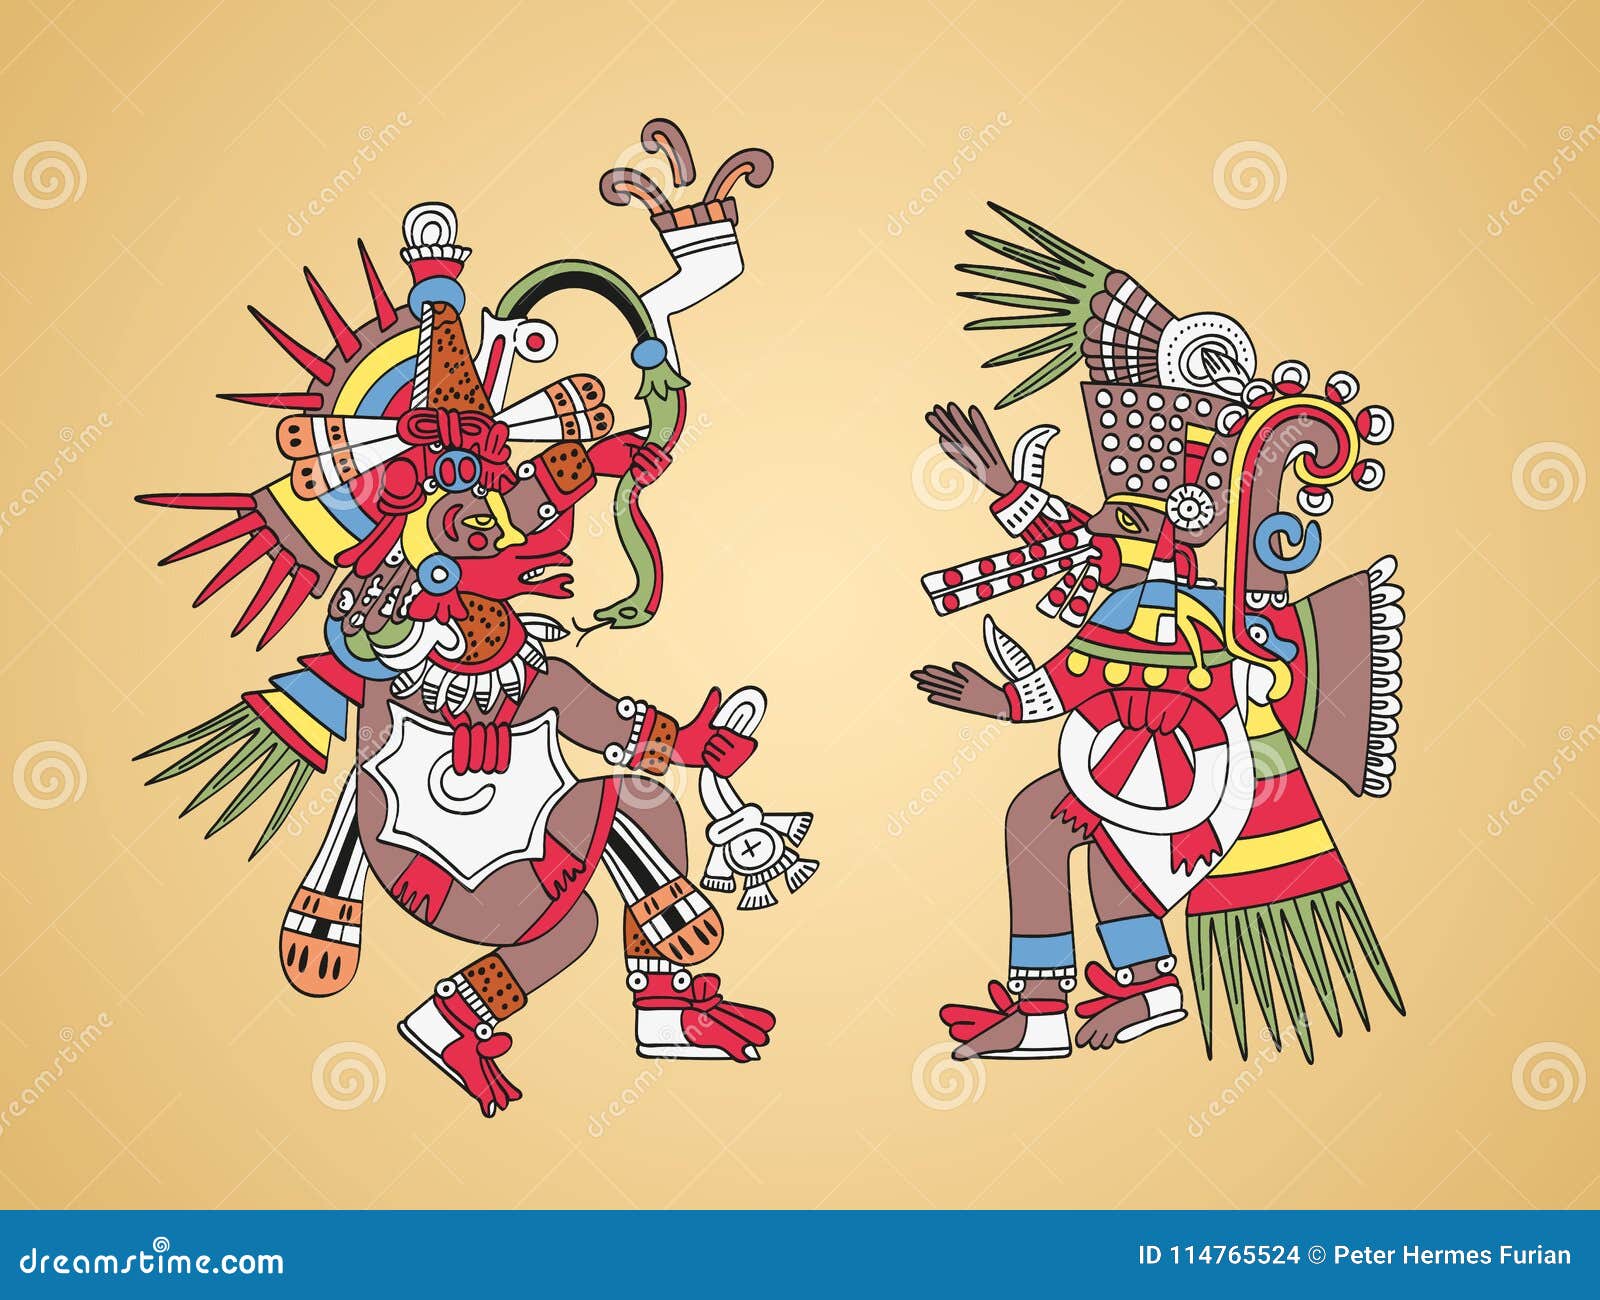 quetzalcoatl and tezcatlipoca, aztec gods and twin brothers